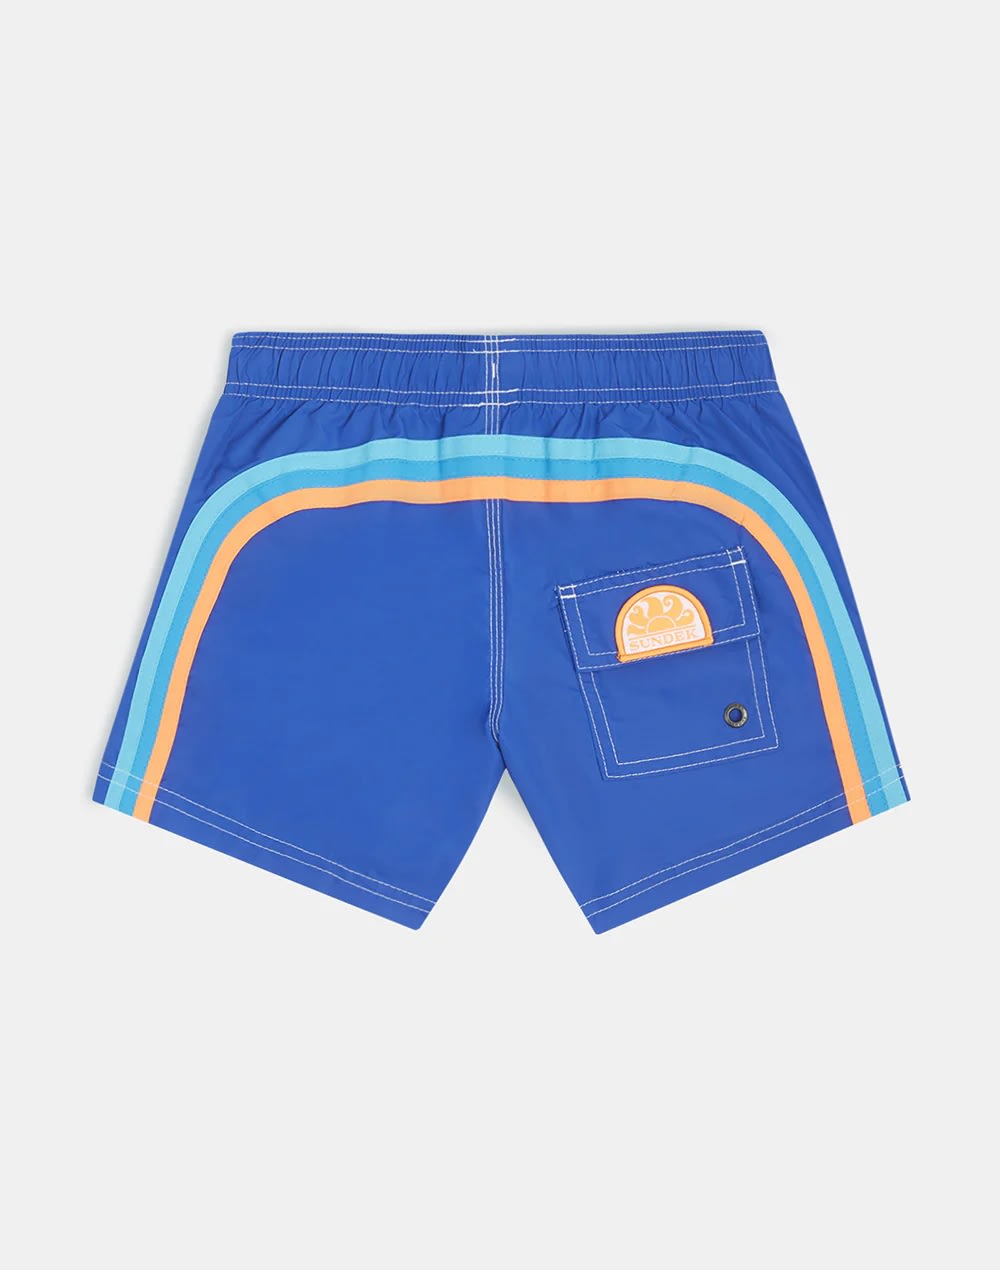 Sundek Kids' Swimsuit With Print In Blue